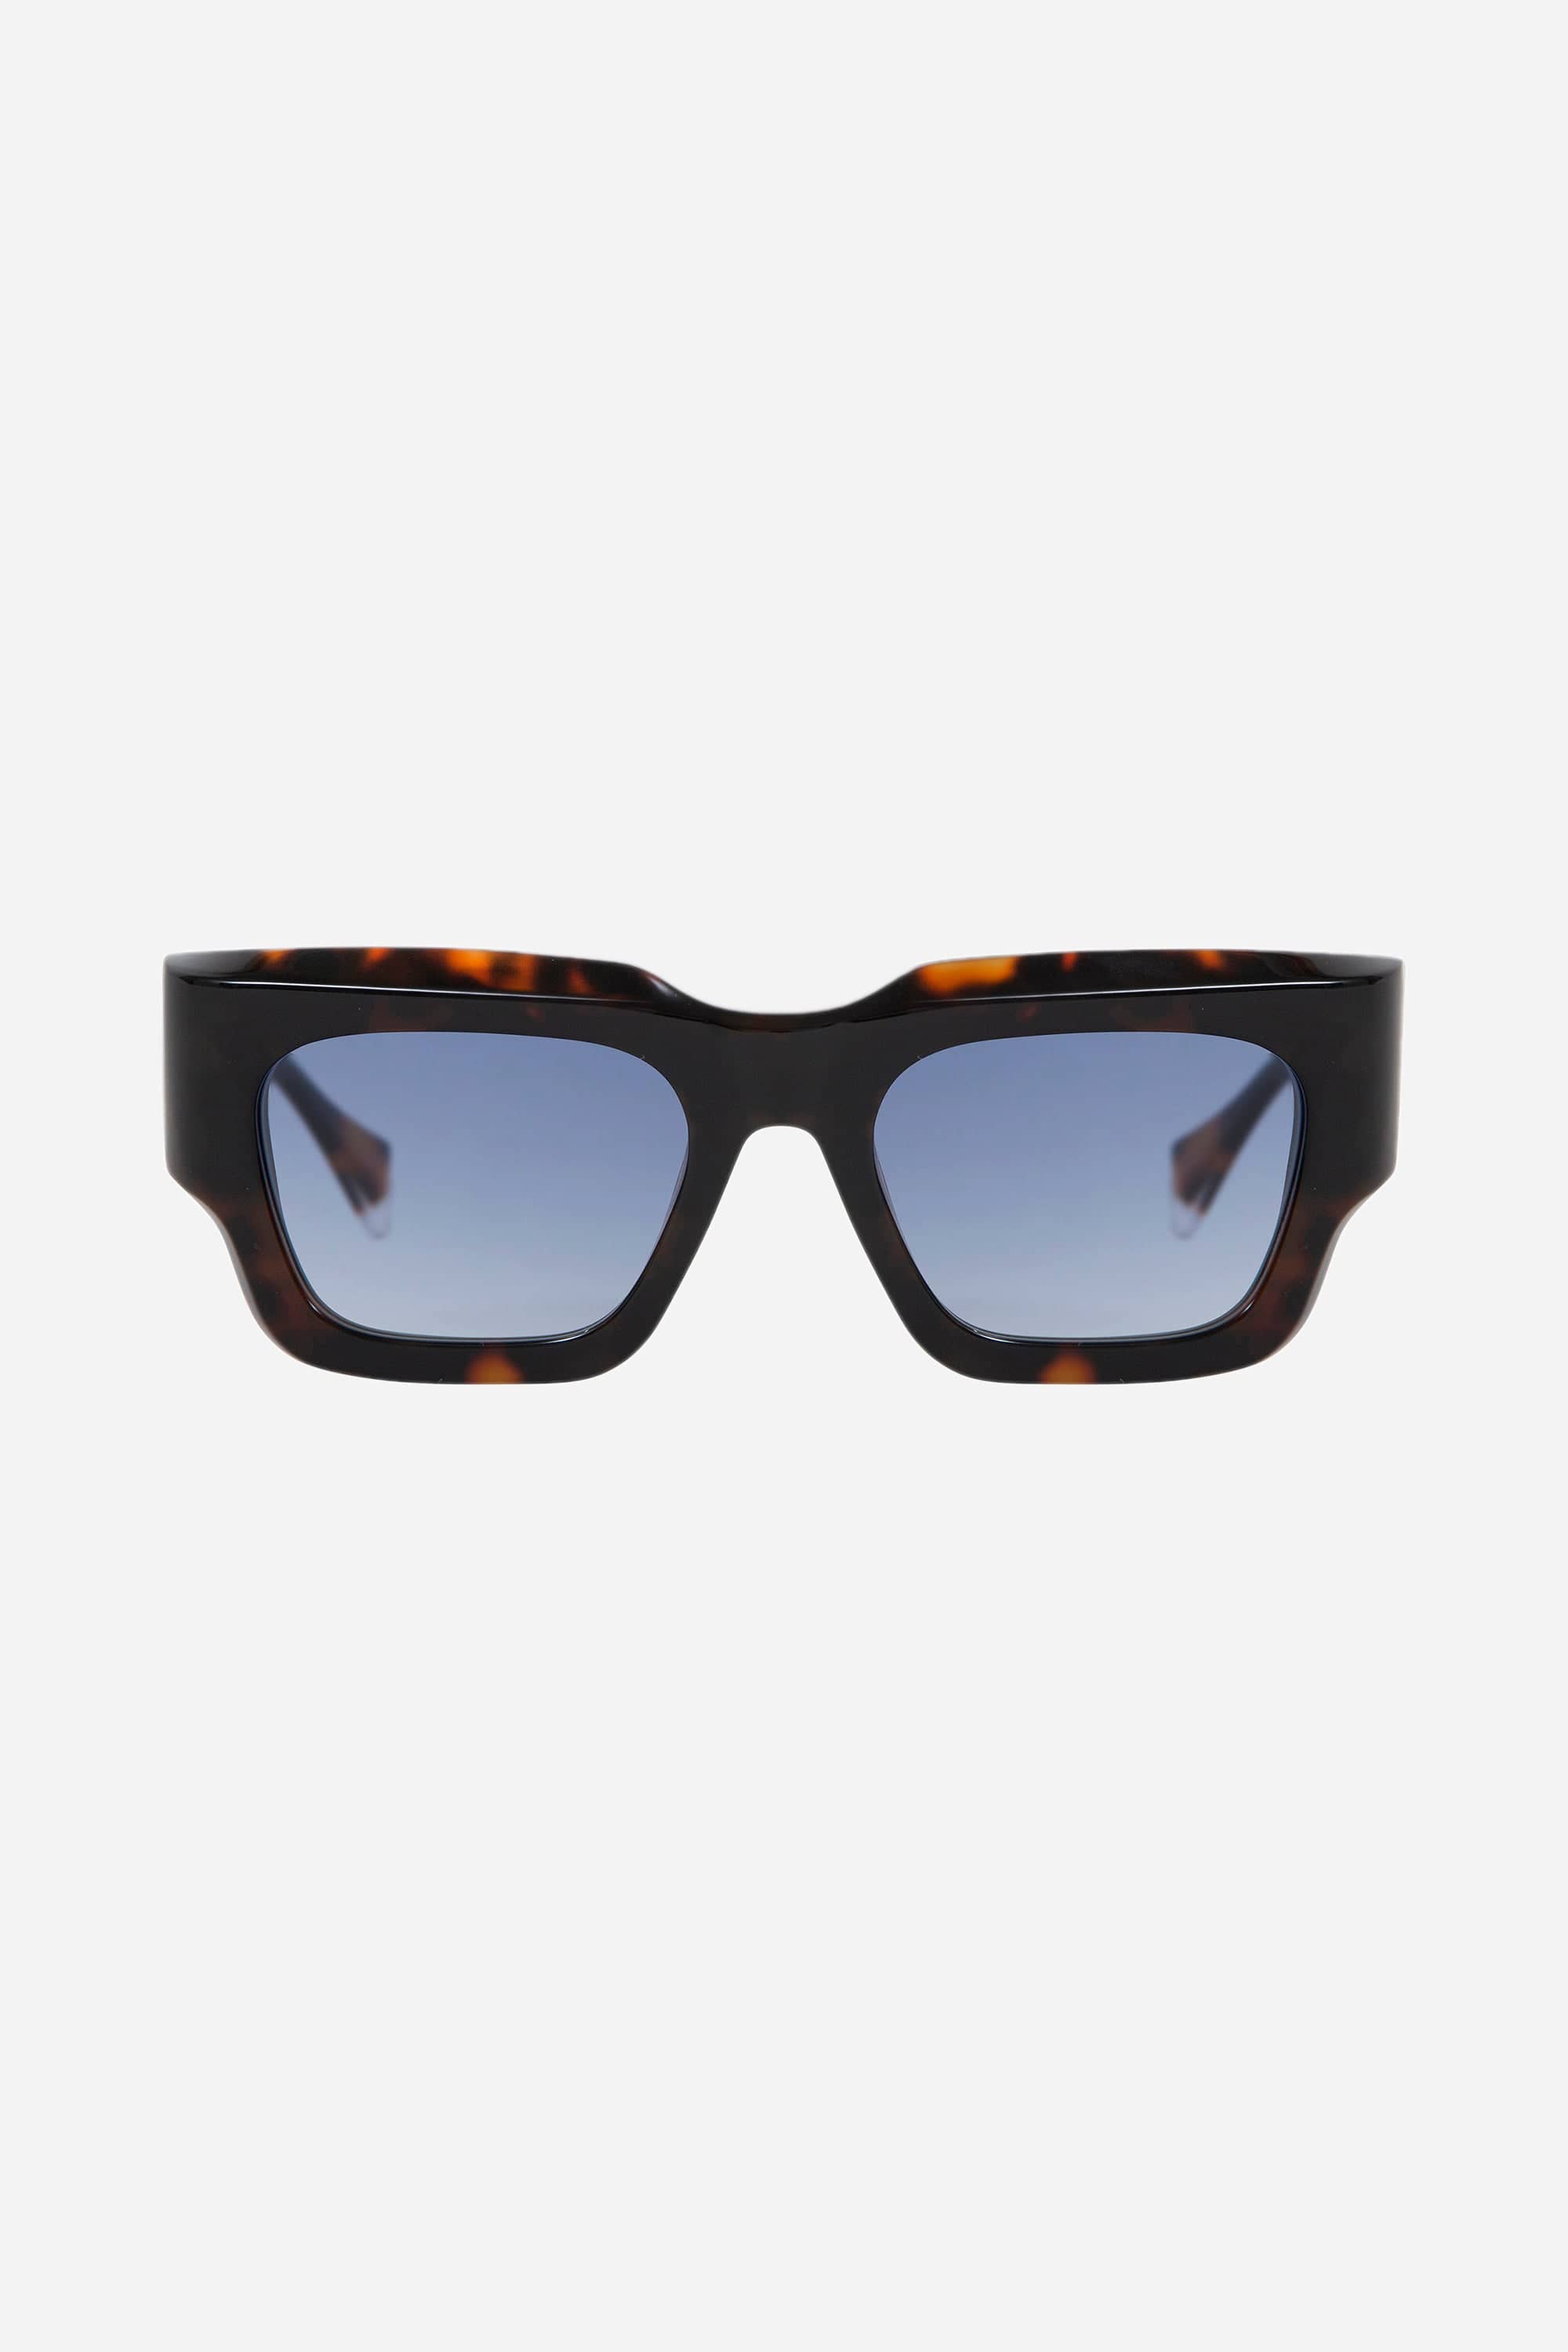 Gigi Studios havana squared bold sunglasses - Eyewear Club